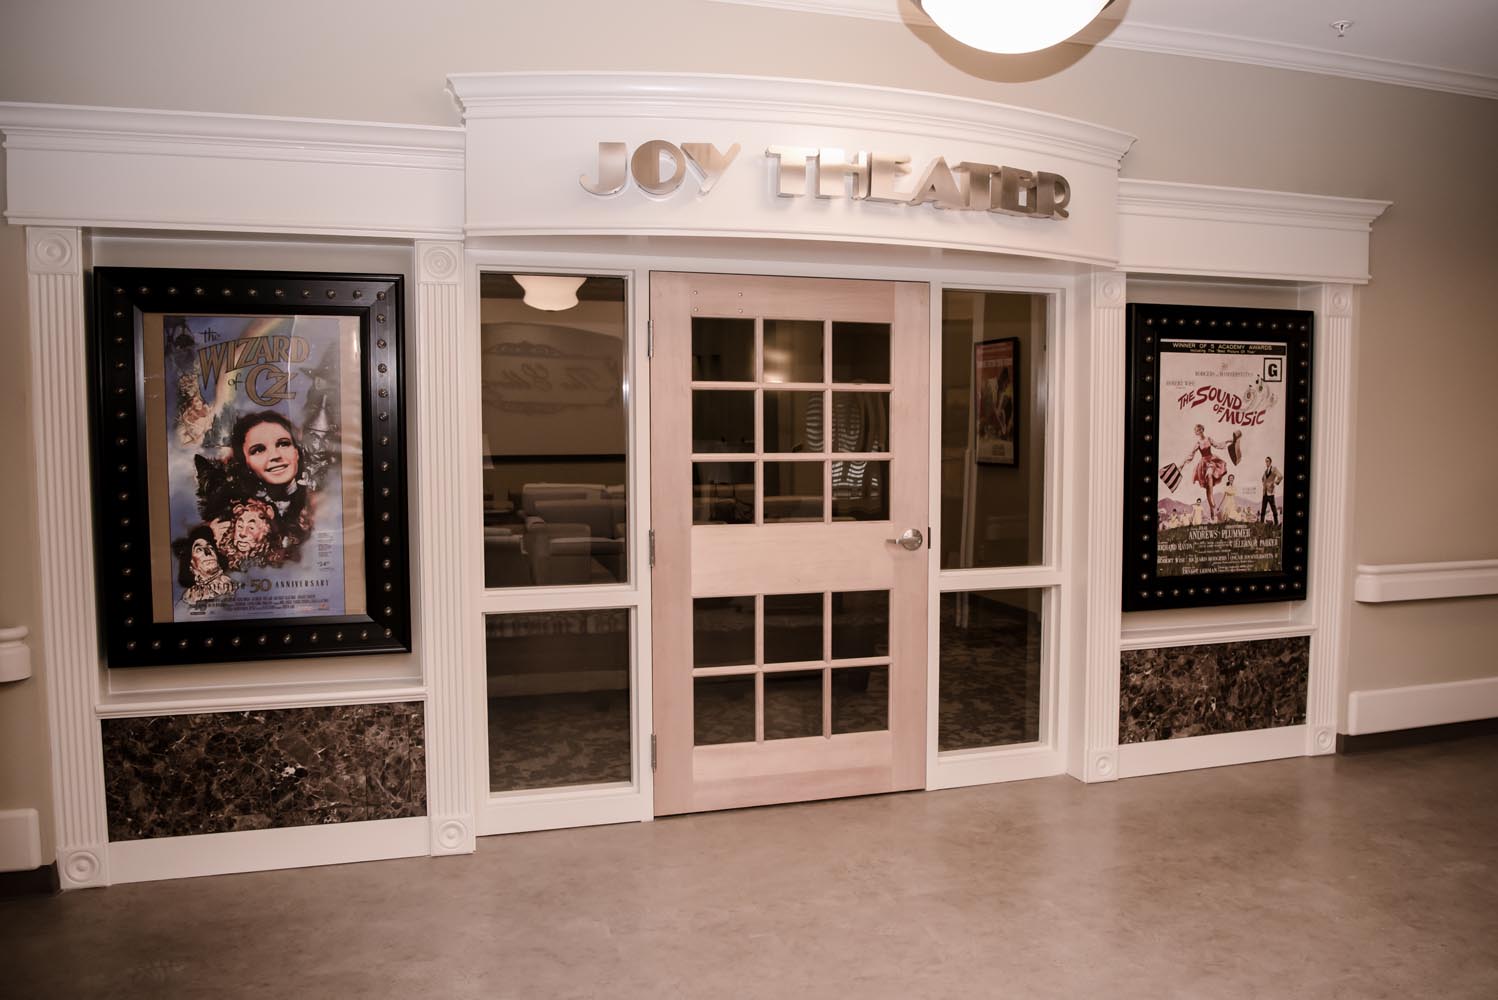 The Joy Theater at the Ellington